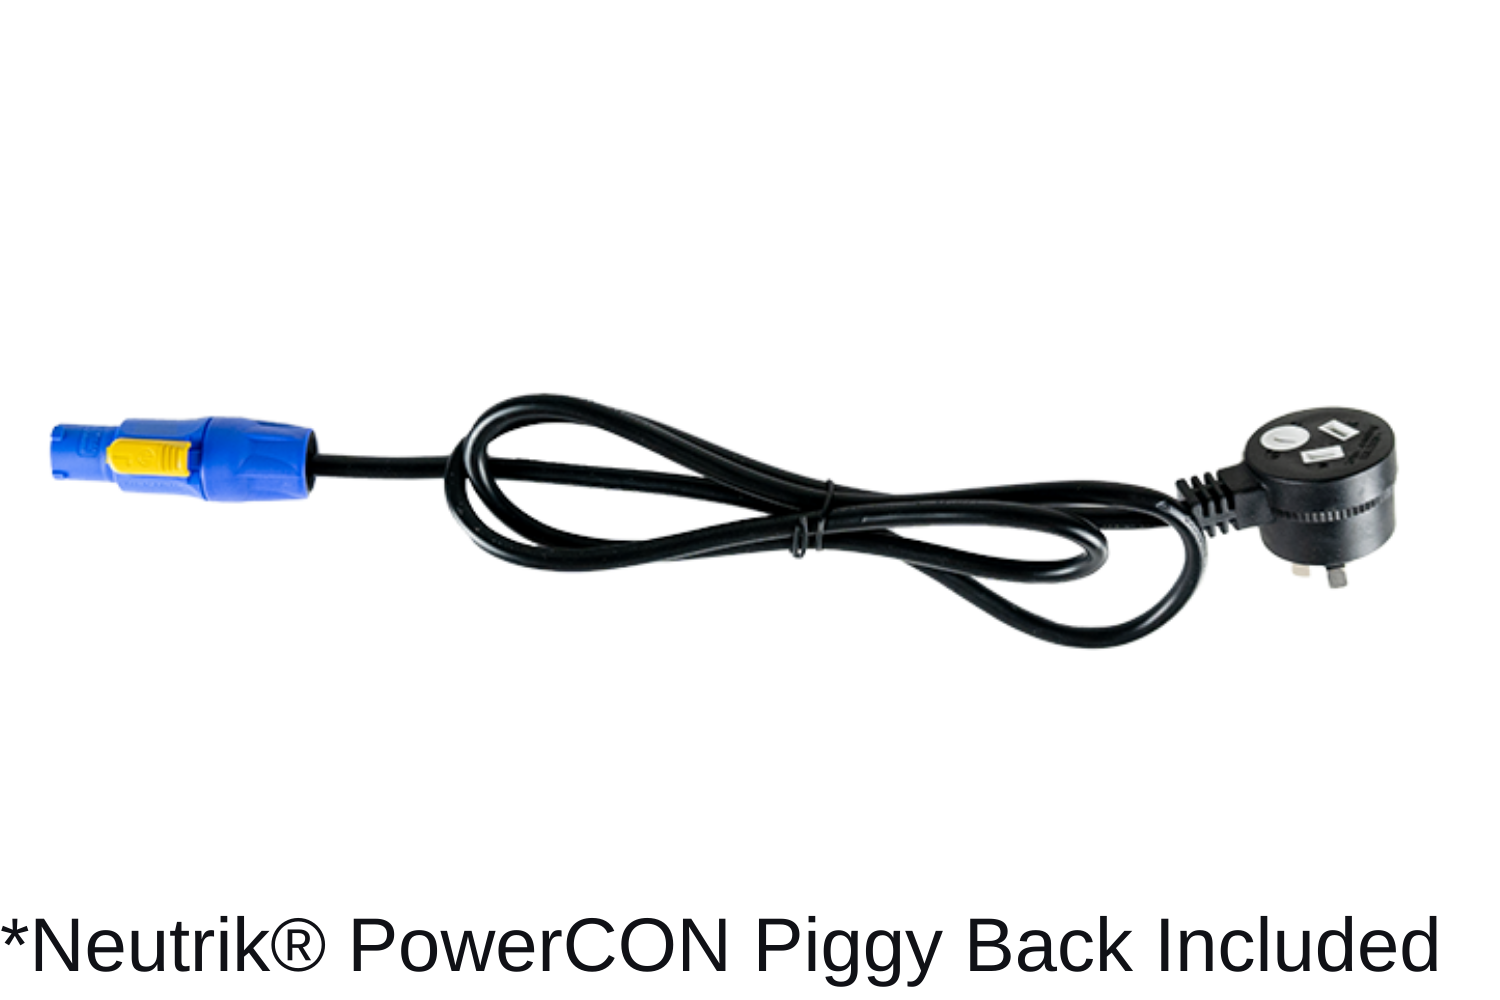 Neutrik _PowerCON Piggy Back Included - 1500 x 1000 px